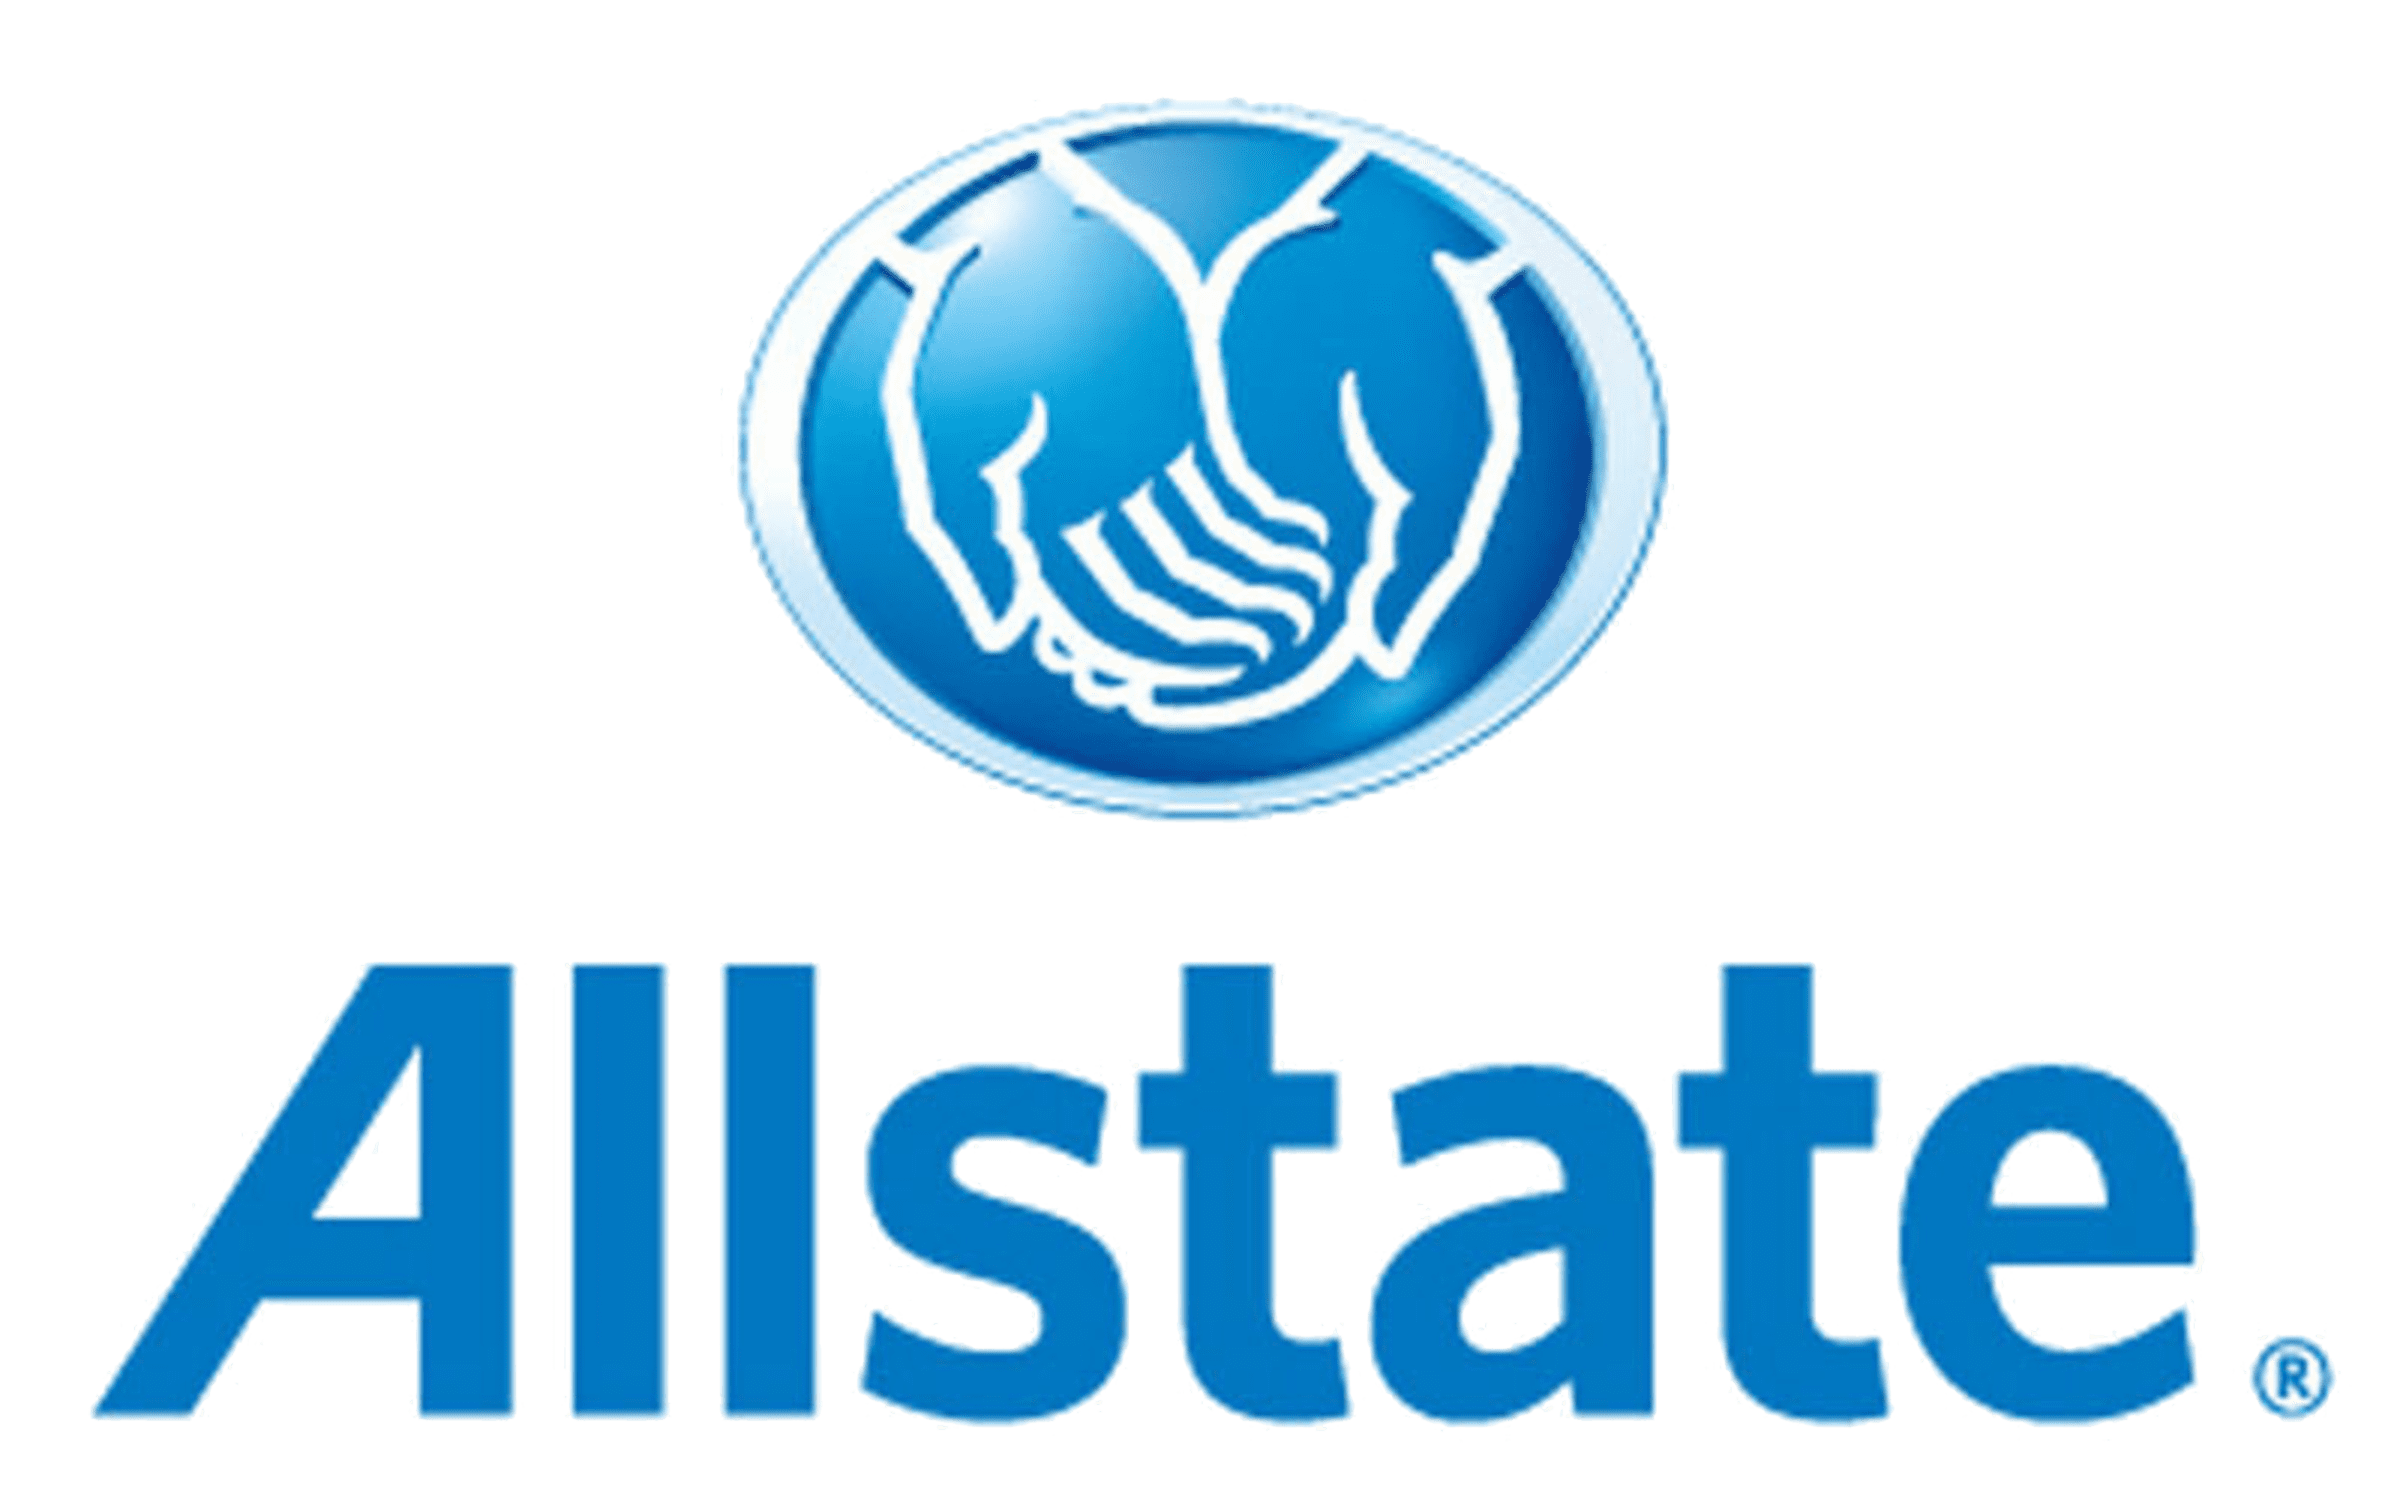 Allstate logo PNG Pic